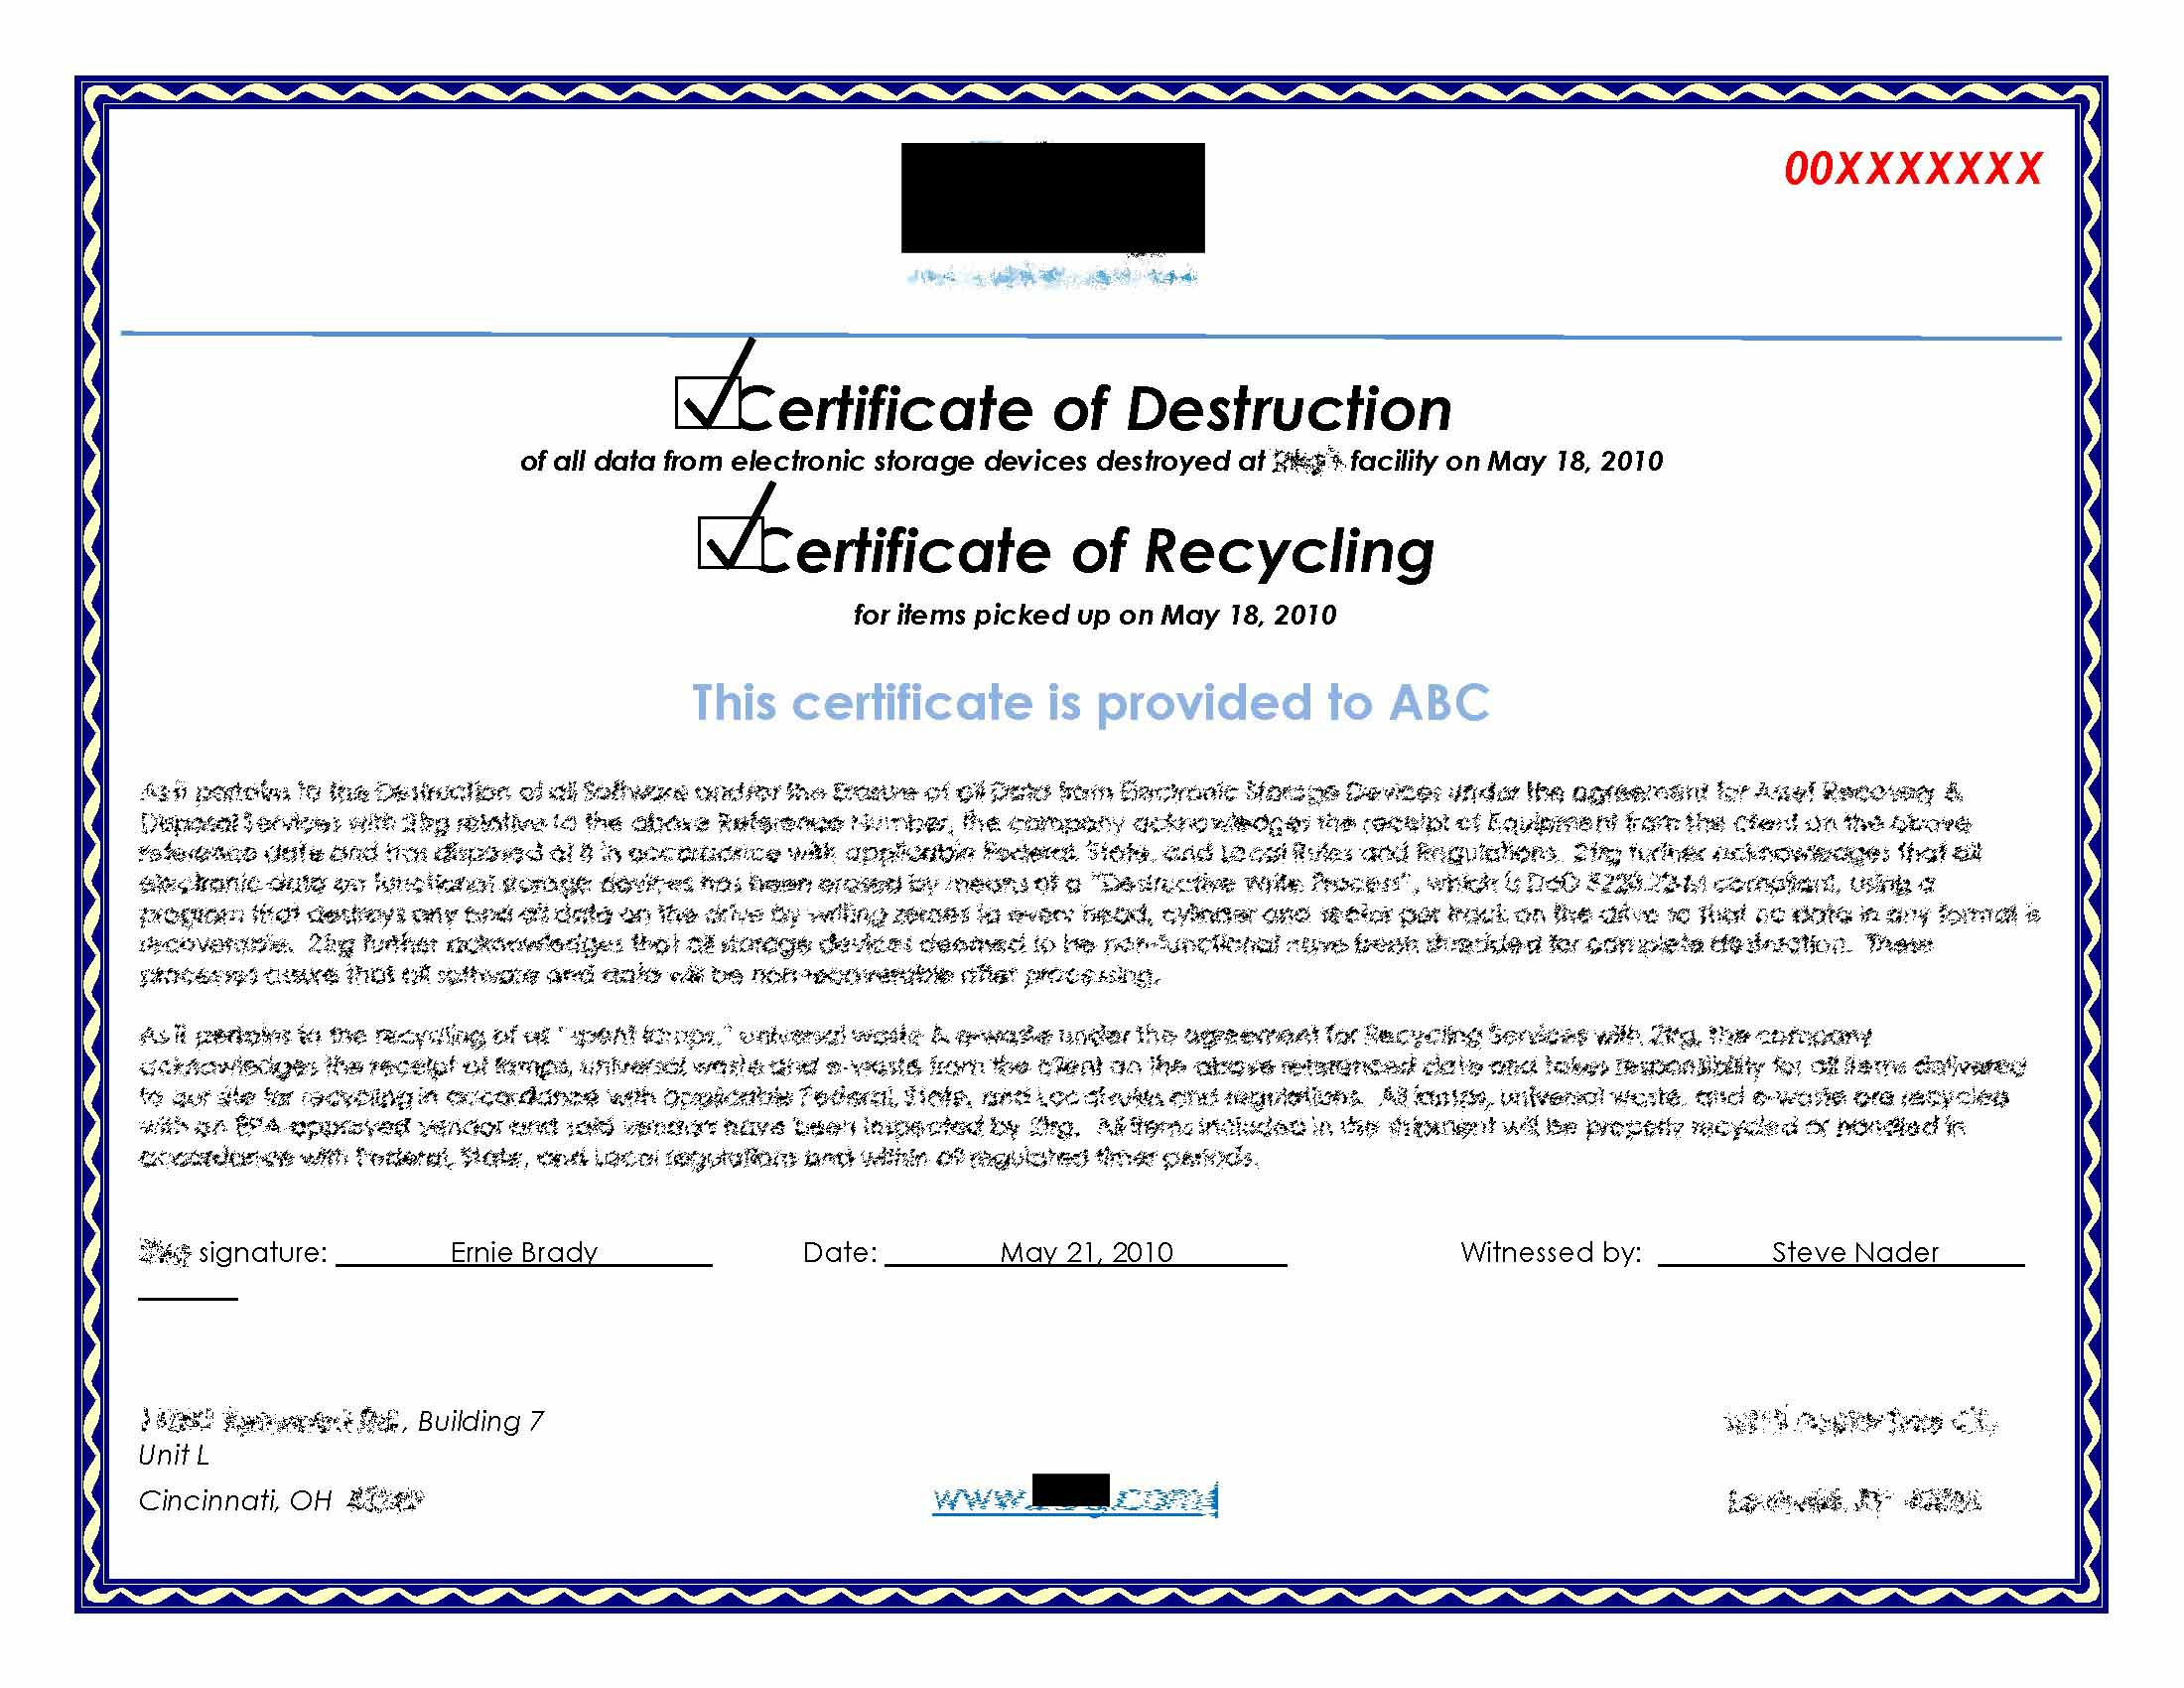 Hard Drive Destruction Certificate Template  Great Sample with regard to Free Certificate Of Destruction Template